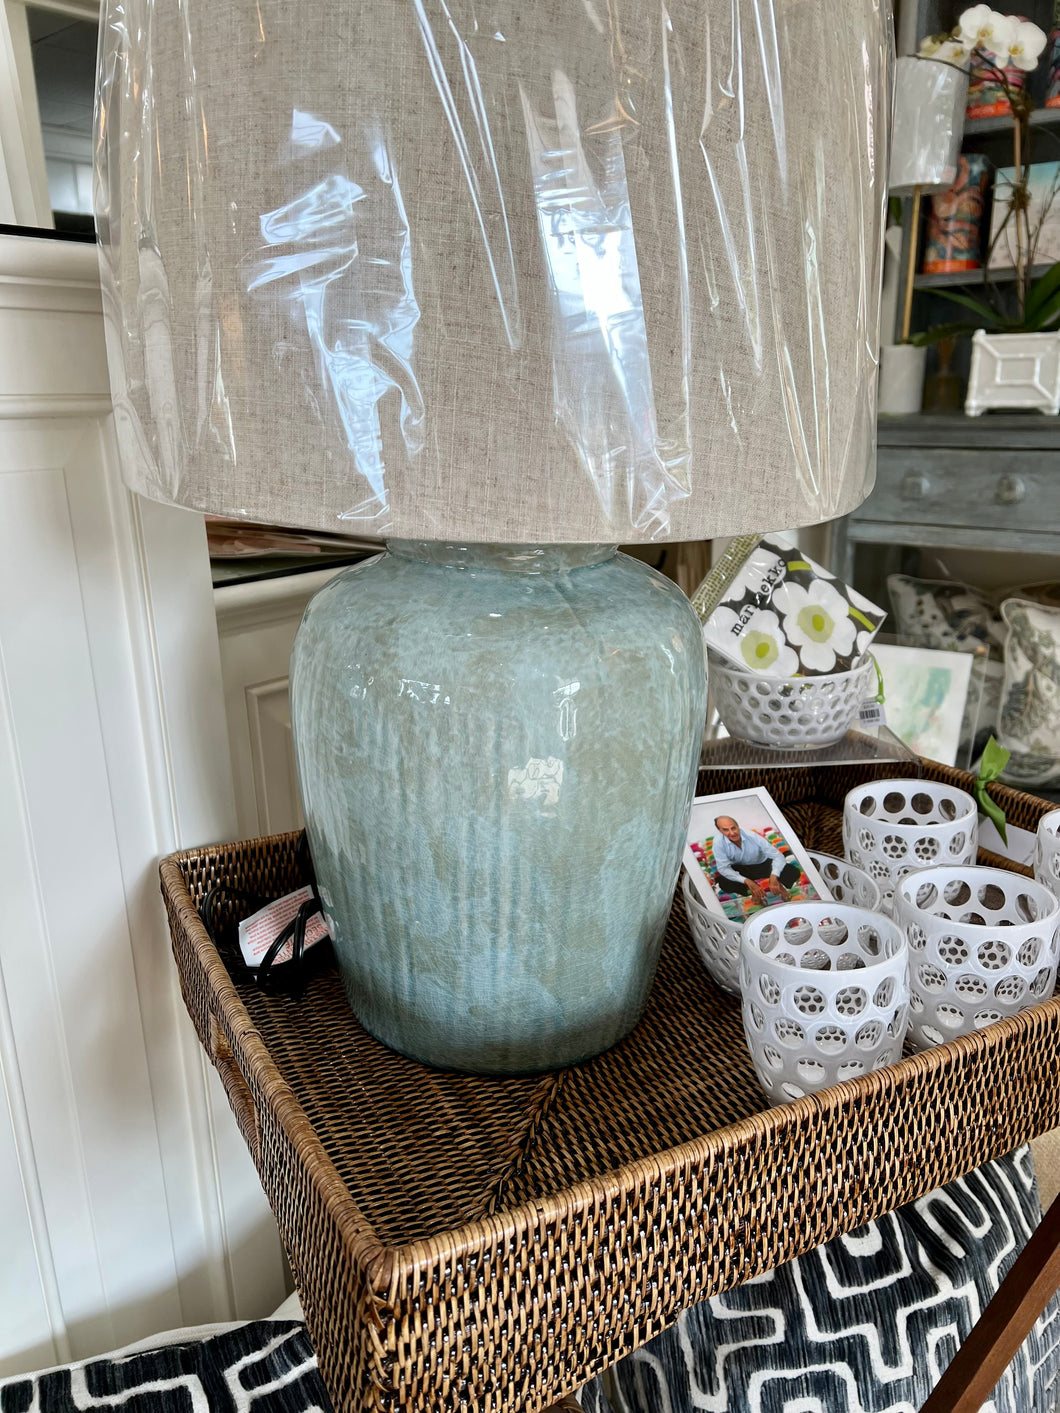 Stoneware lamp